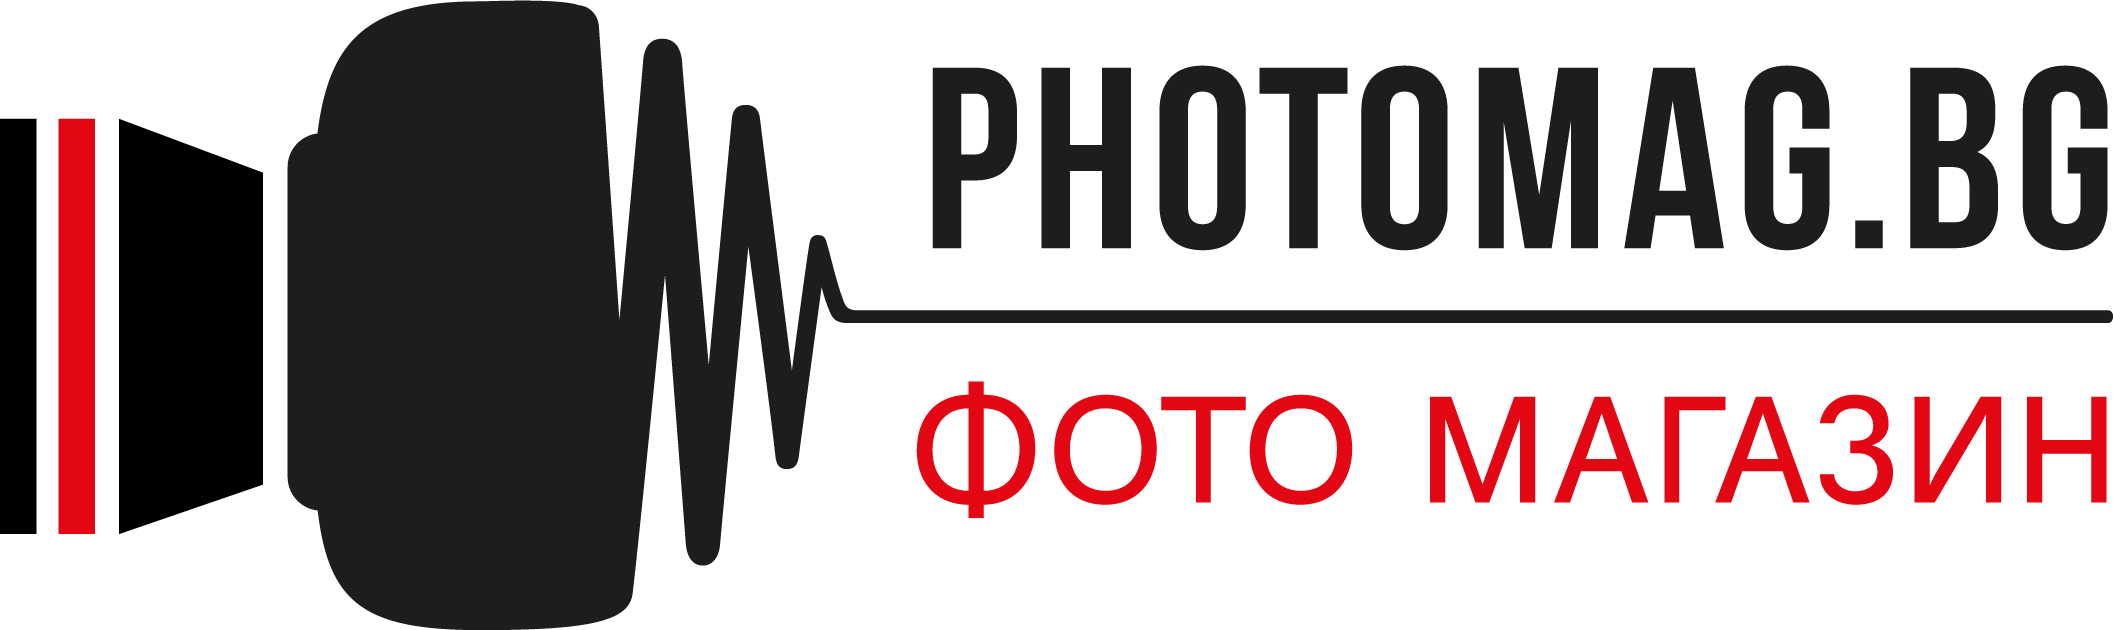 Photomag logo